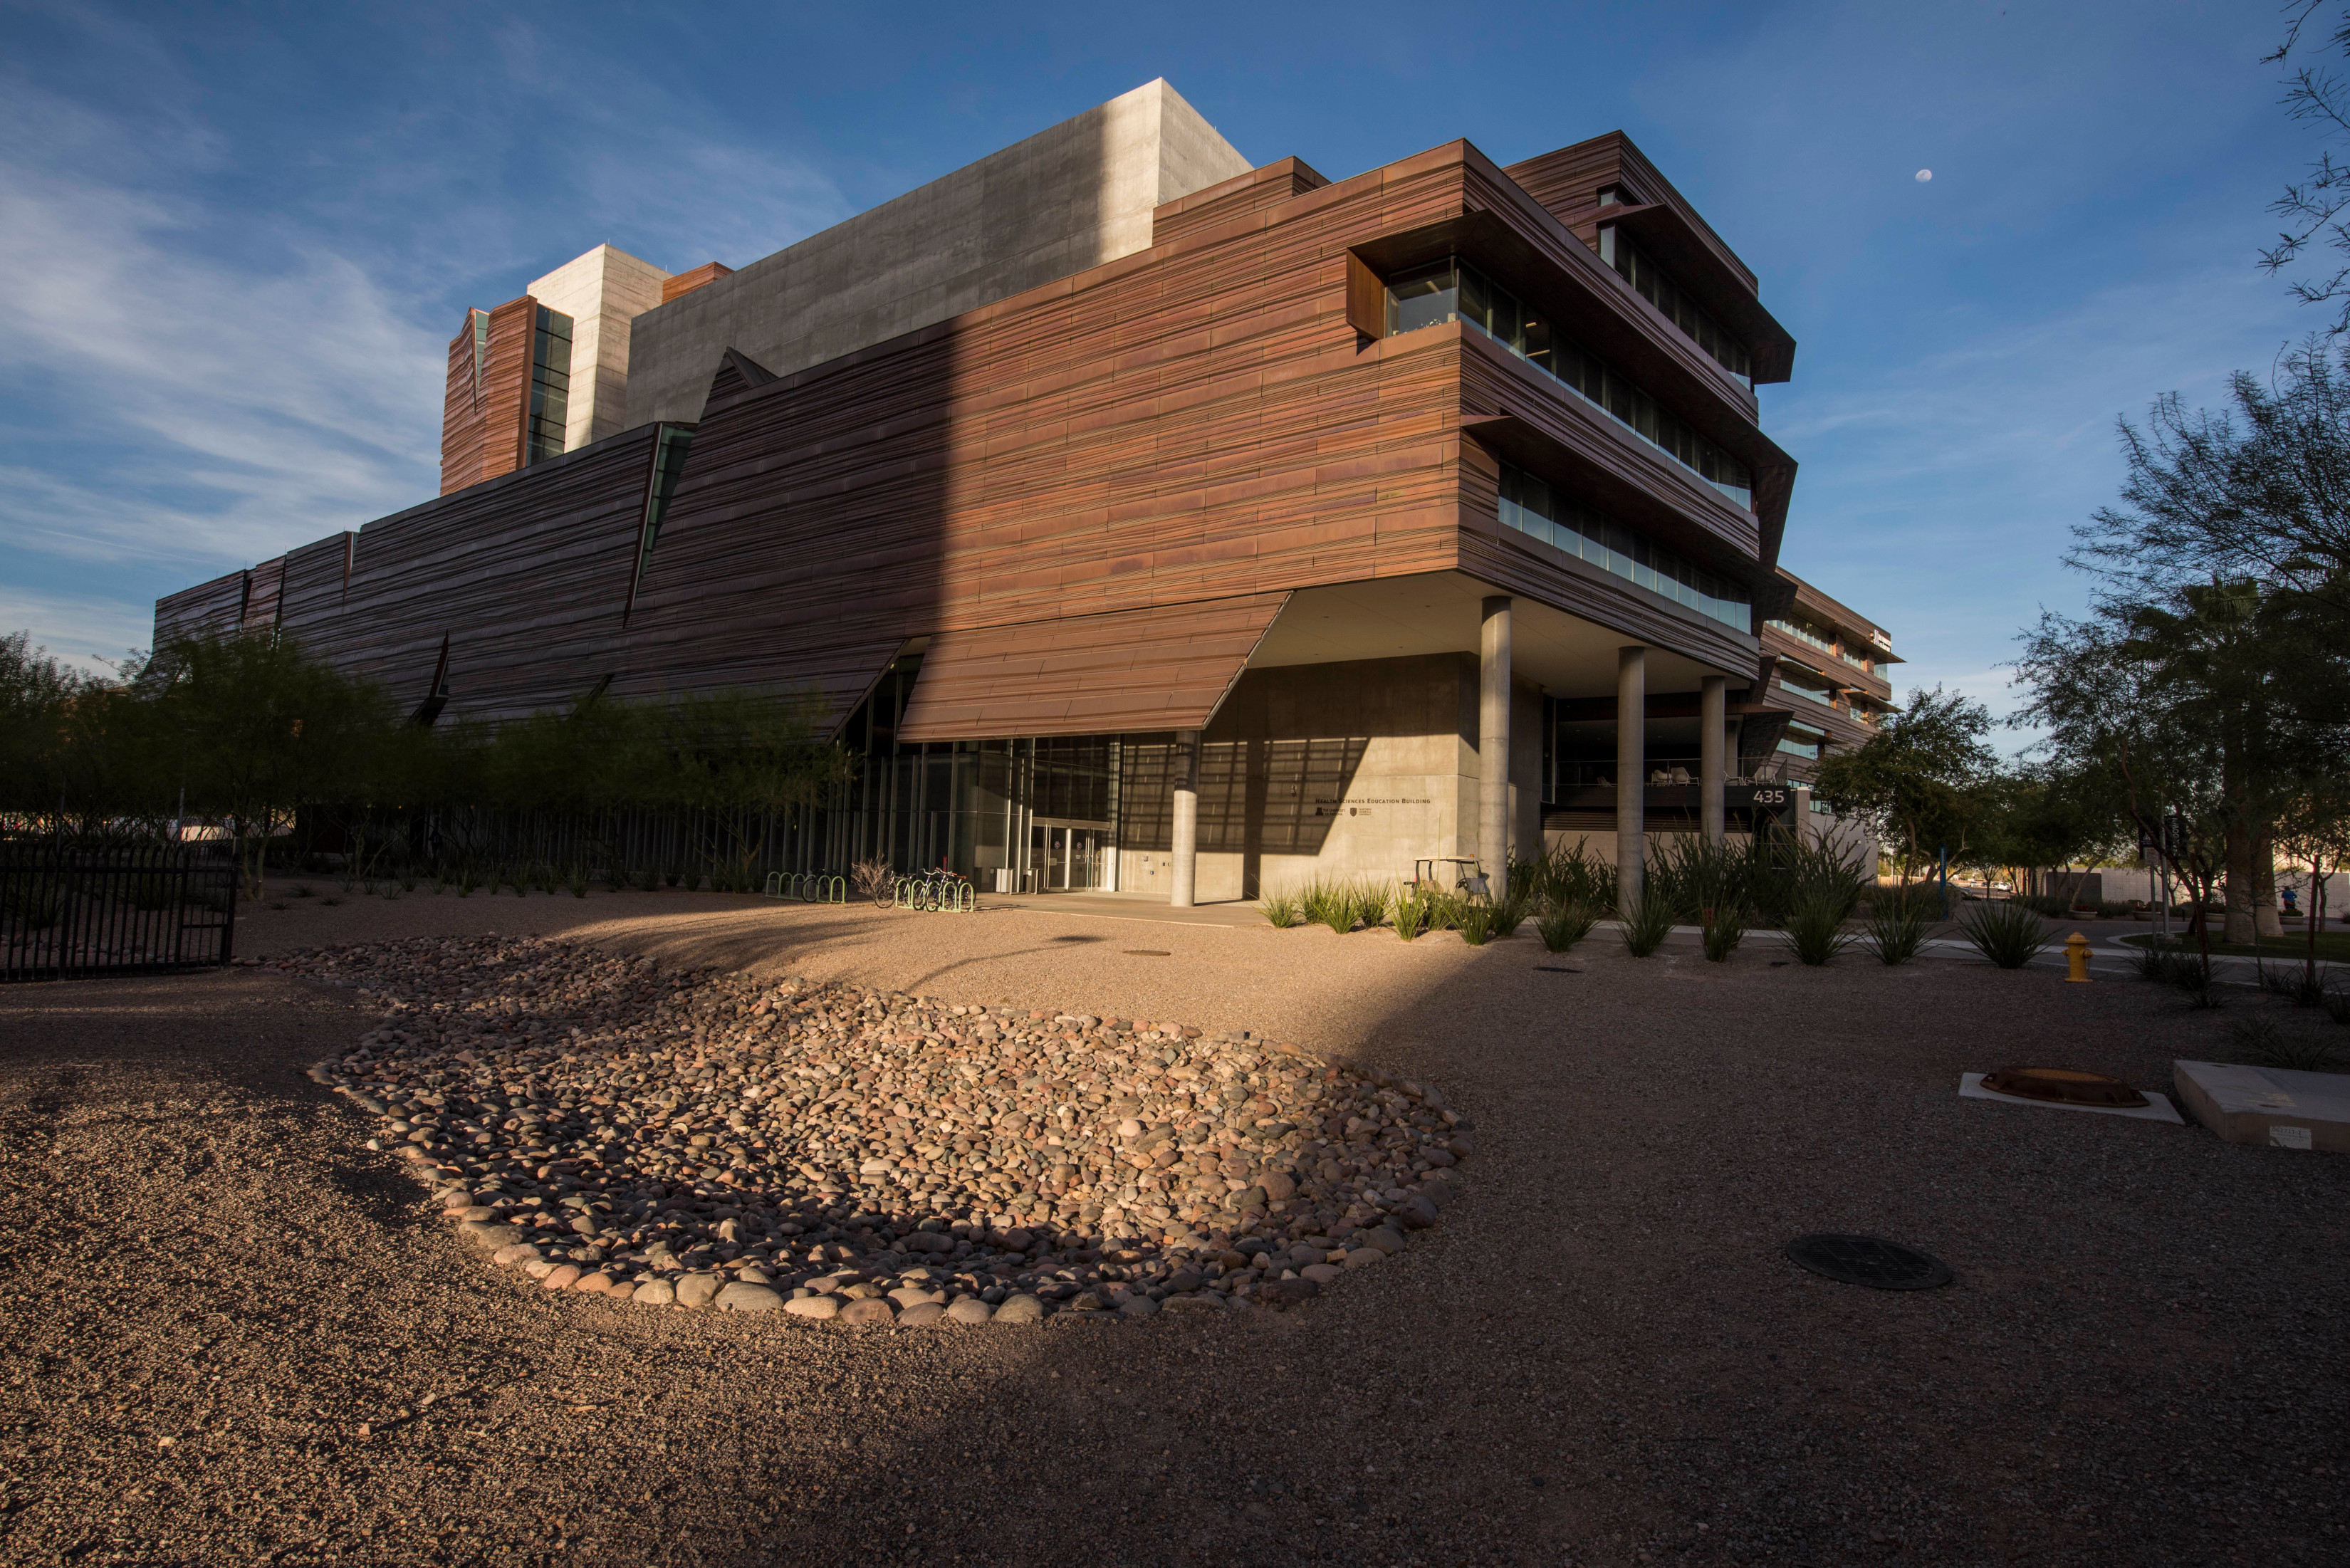 The Bioscience Core medical building in Phoenix.